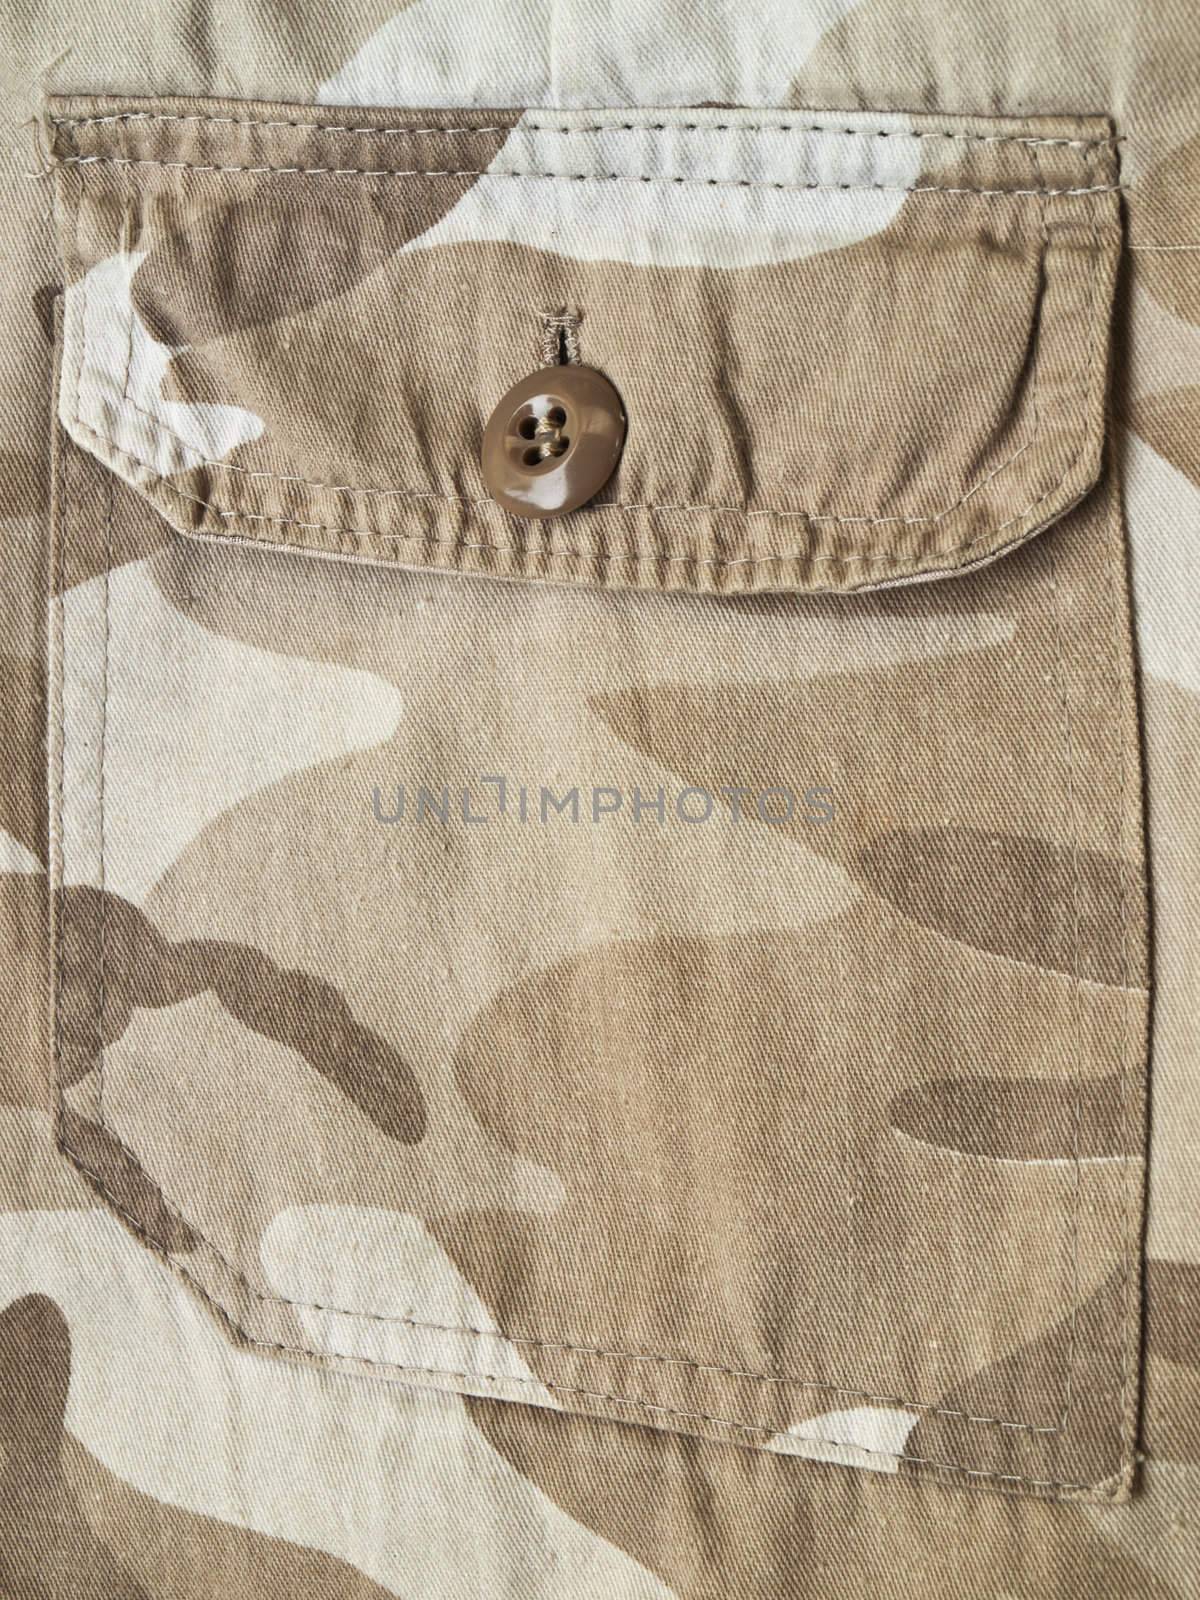 Pocket on a camouflage pants by gururugu